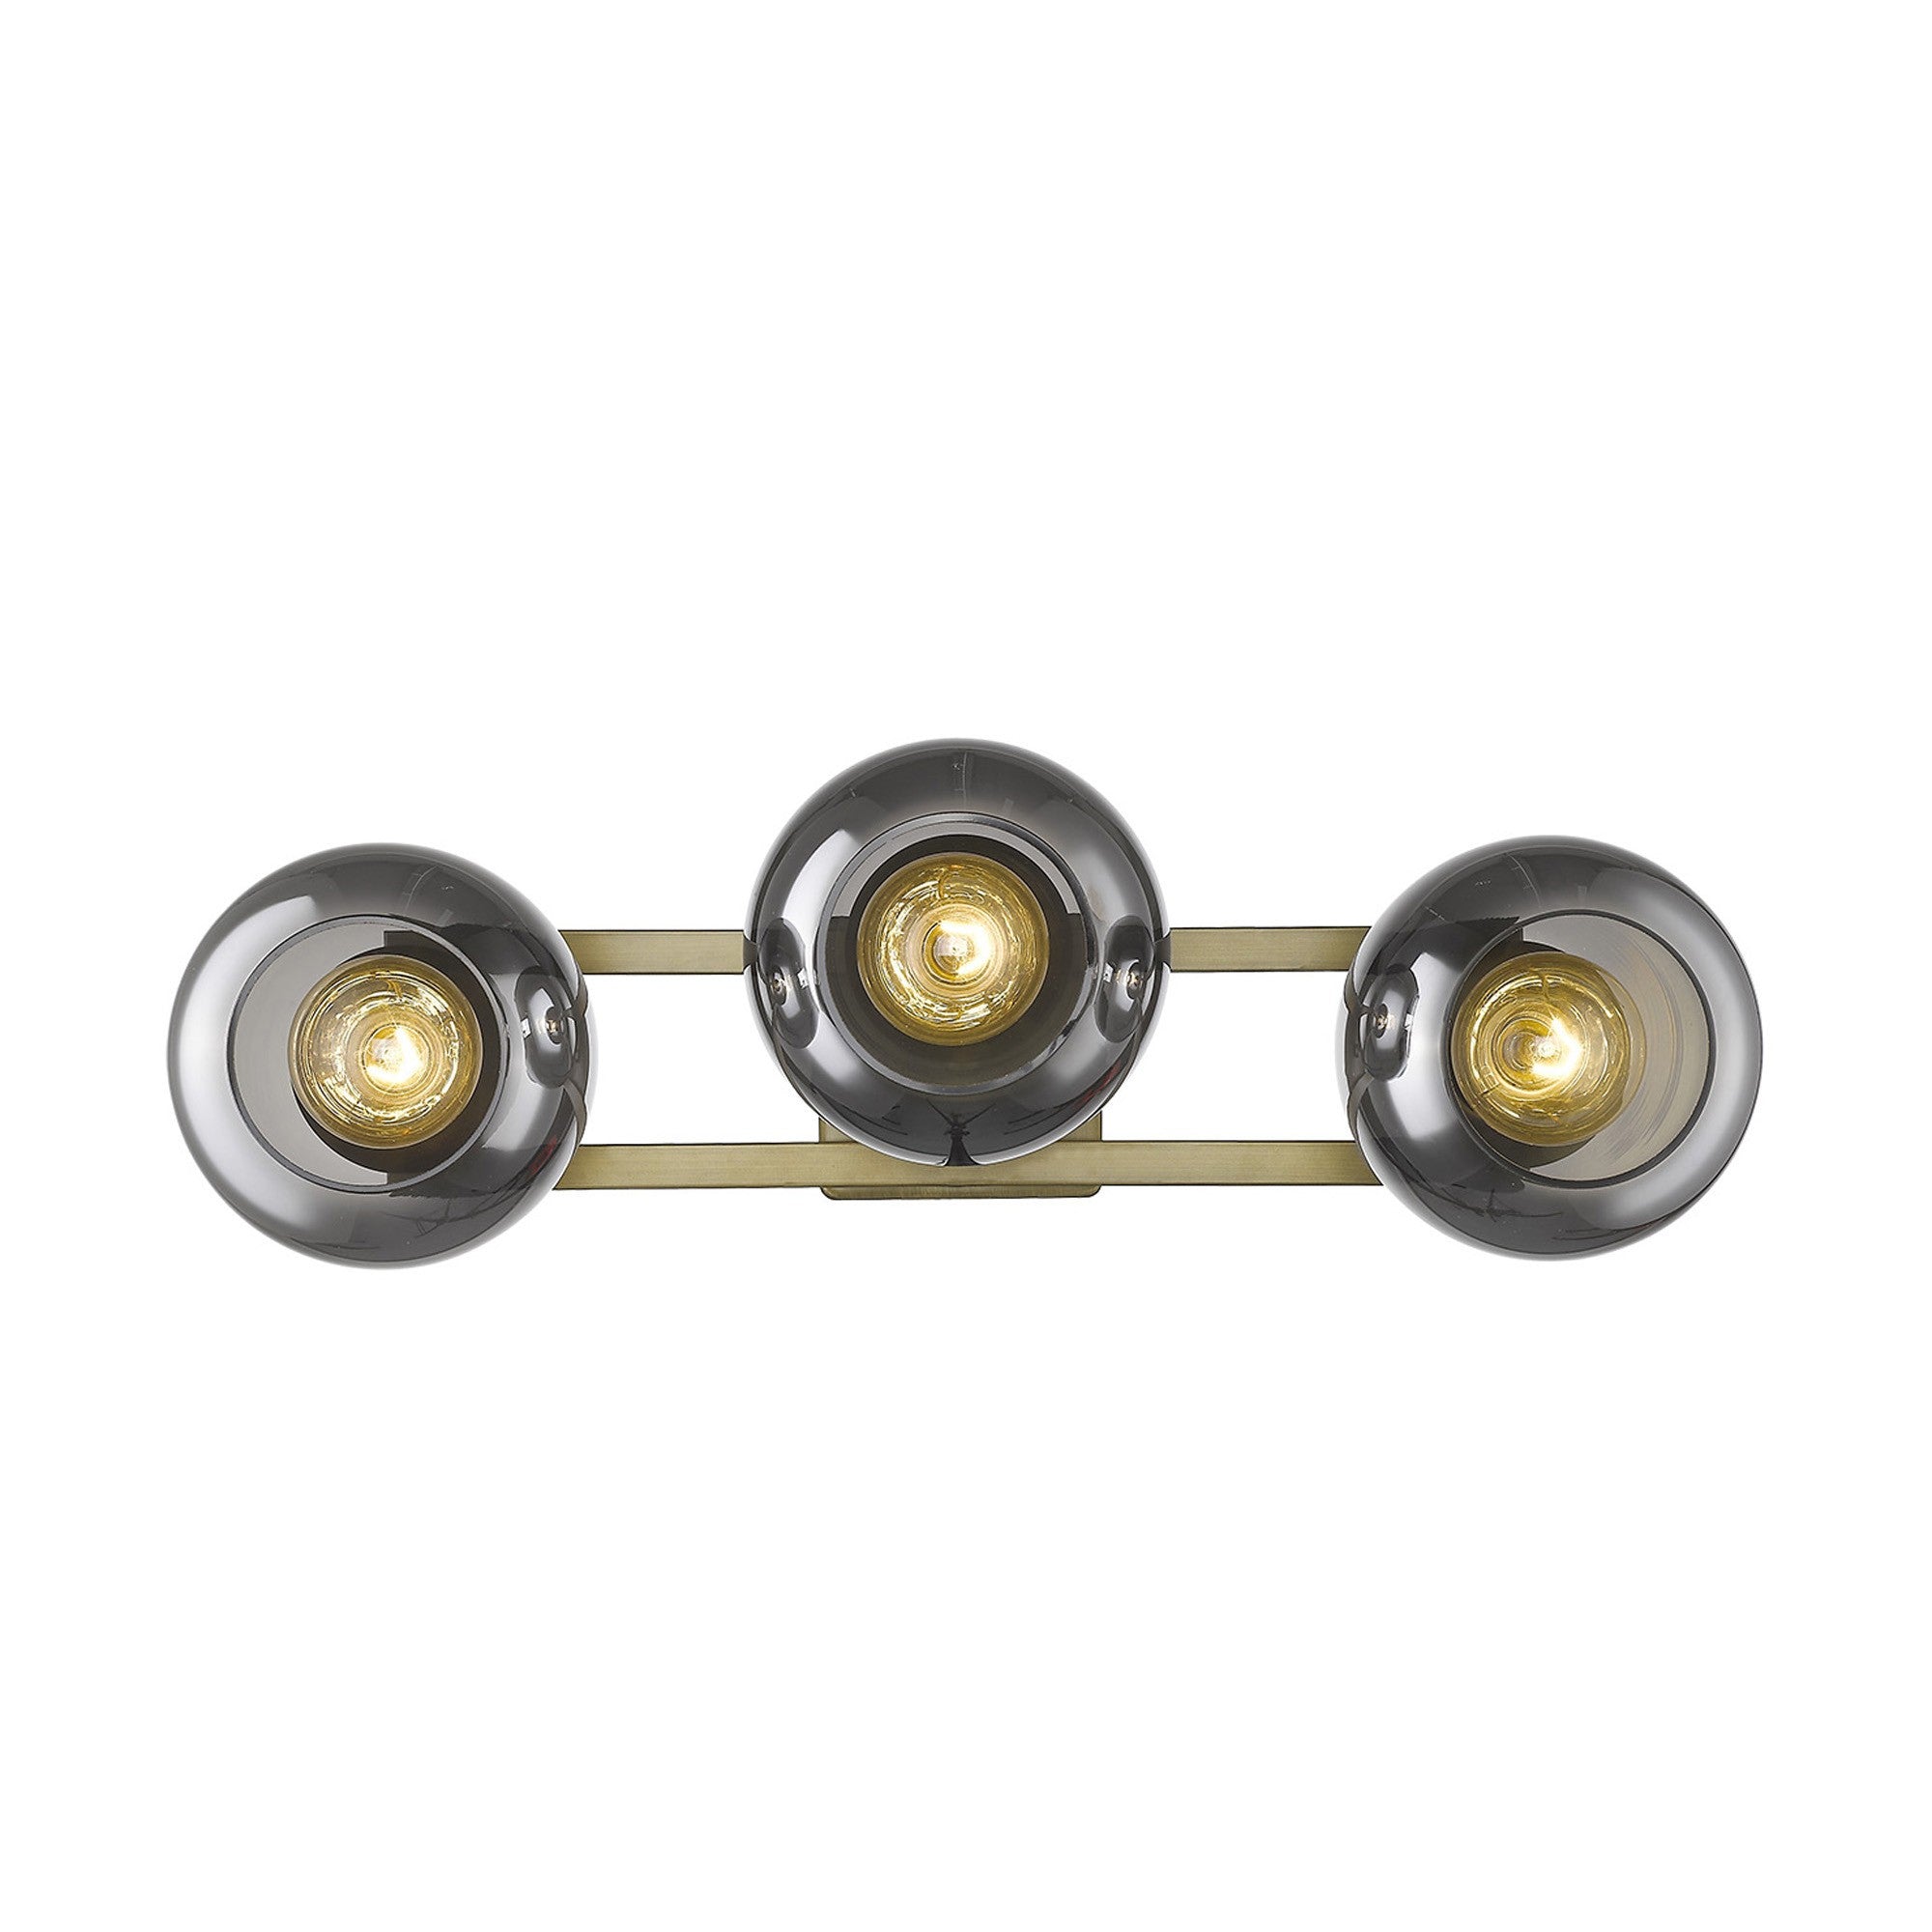 Lunette 3-Light Aged Brass Sconce